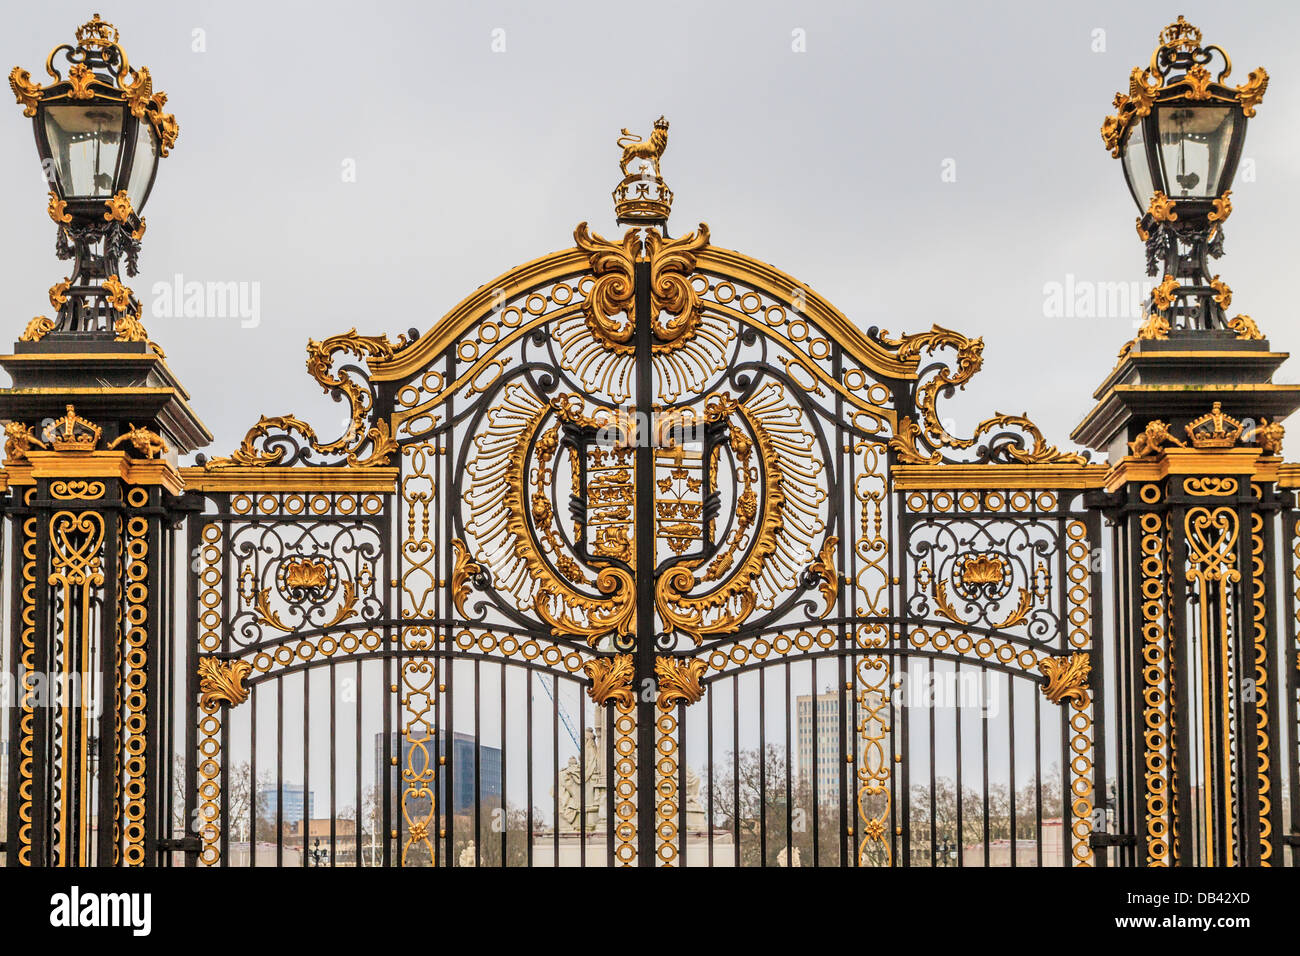 Ornate Gate at Buckingham Palace, London, UK Stock Photo